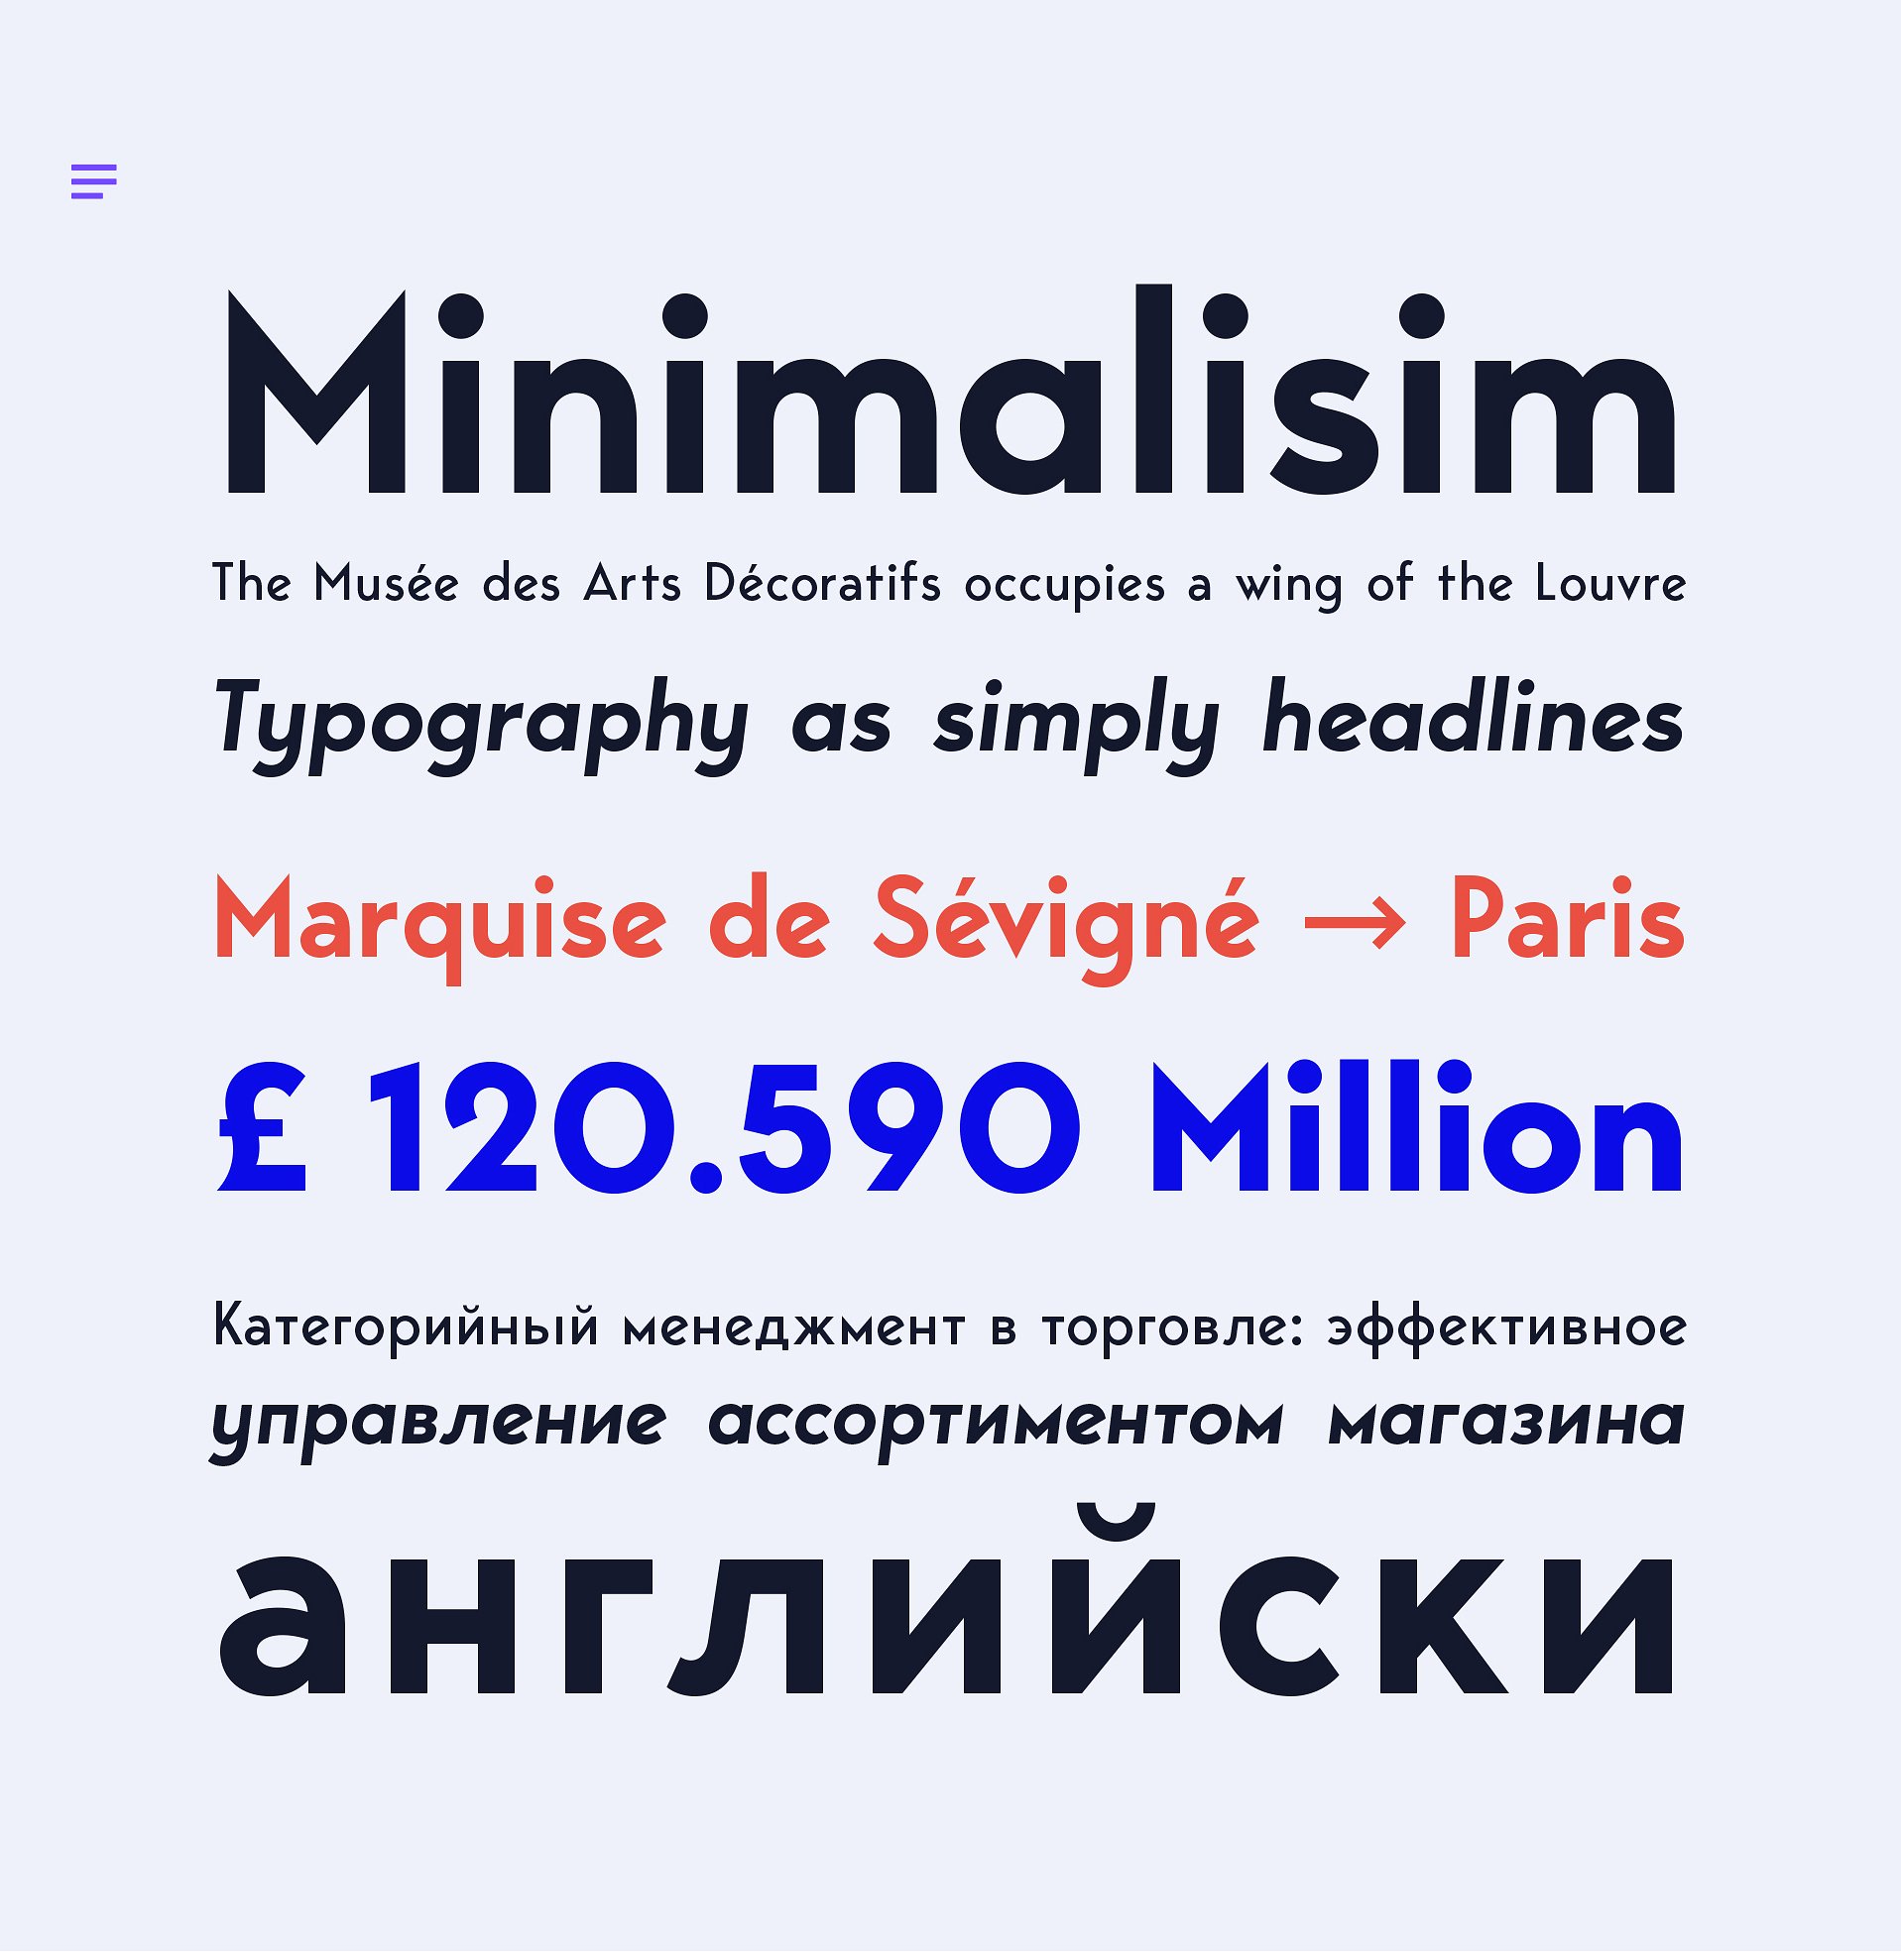 George Sans Geometric Typeface